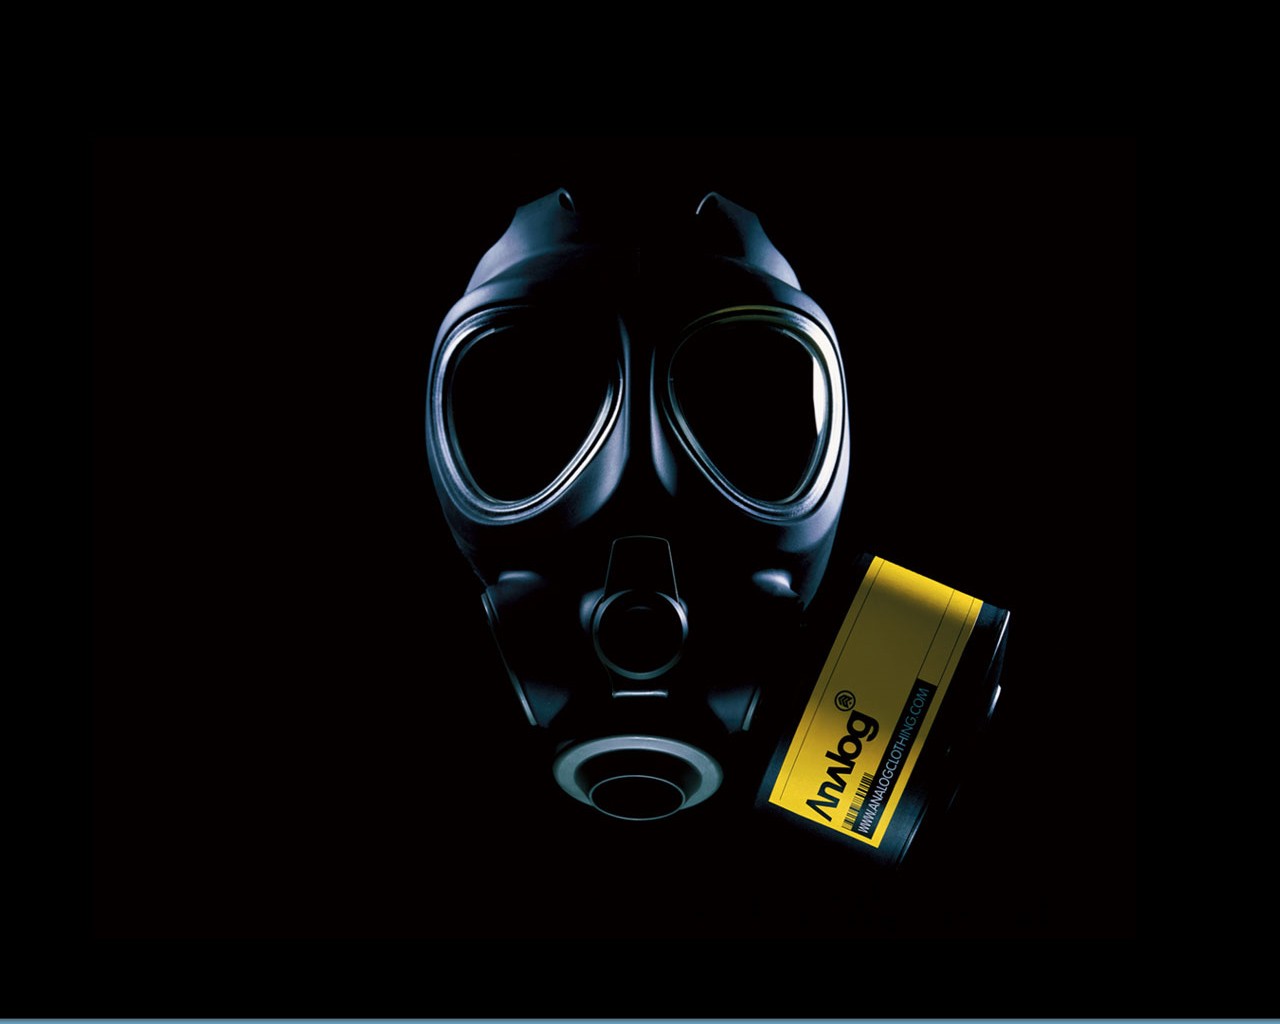 General 1280x1024 gas masks simple background black background minimalism